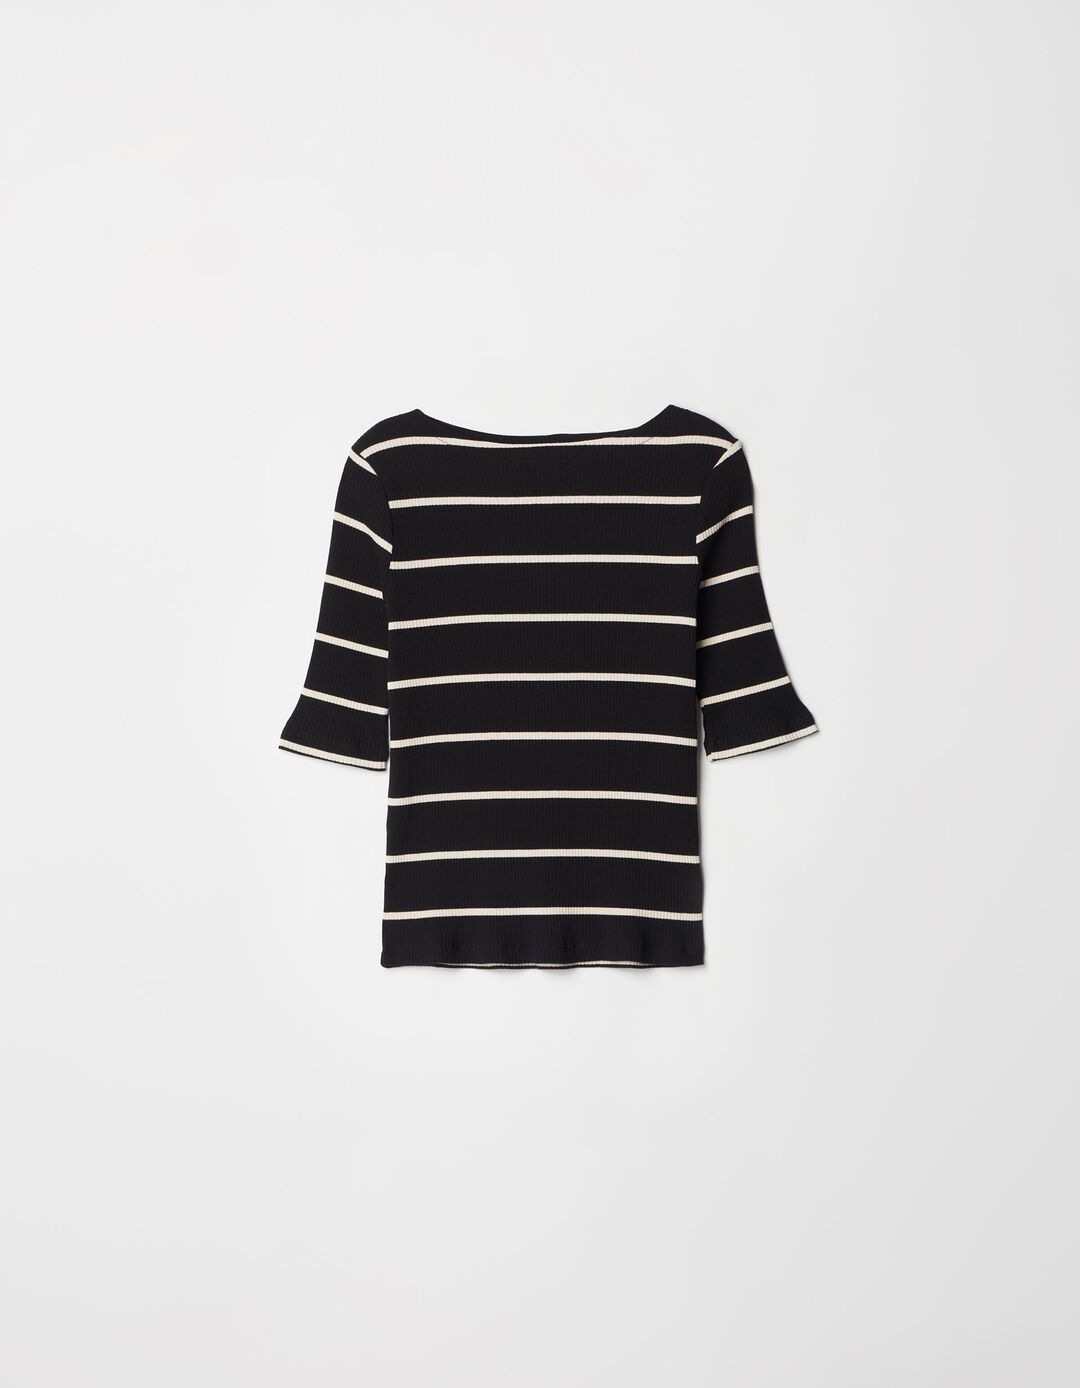 Ribbed Striped T-shirt, Women, Black